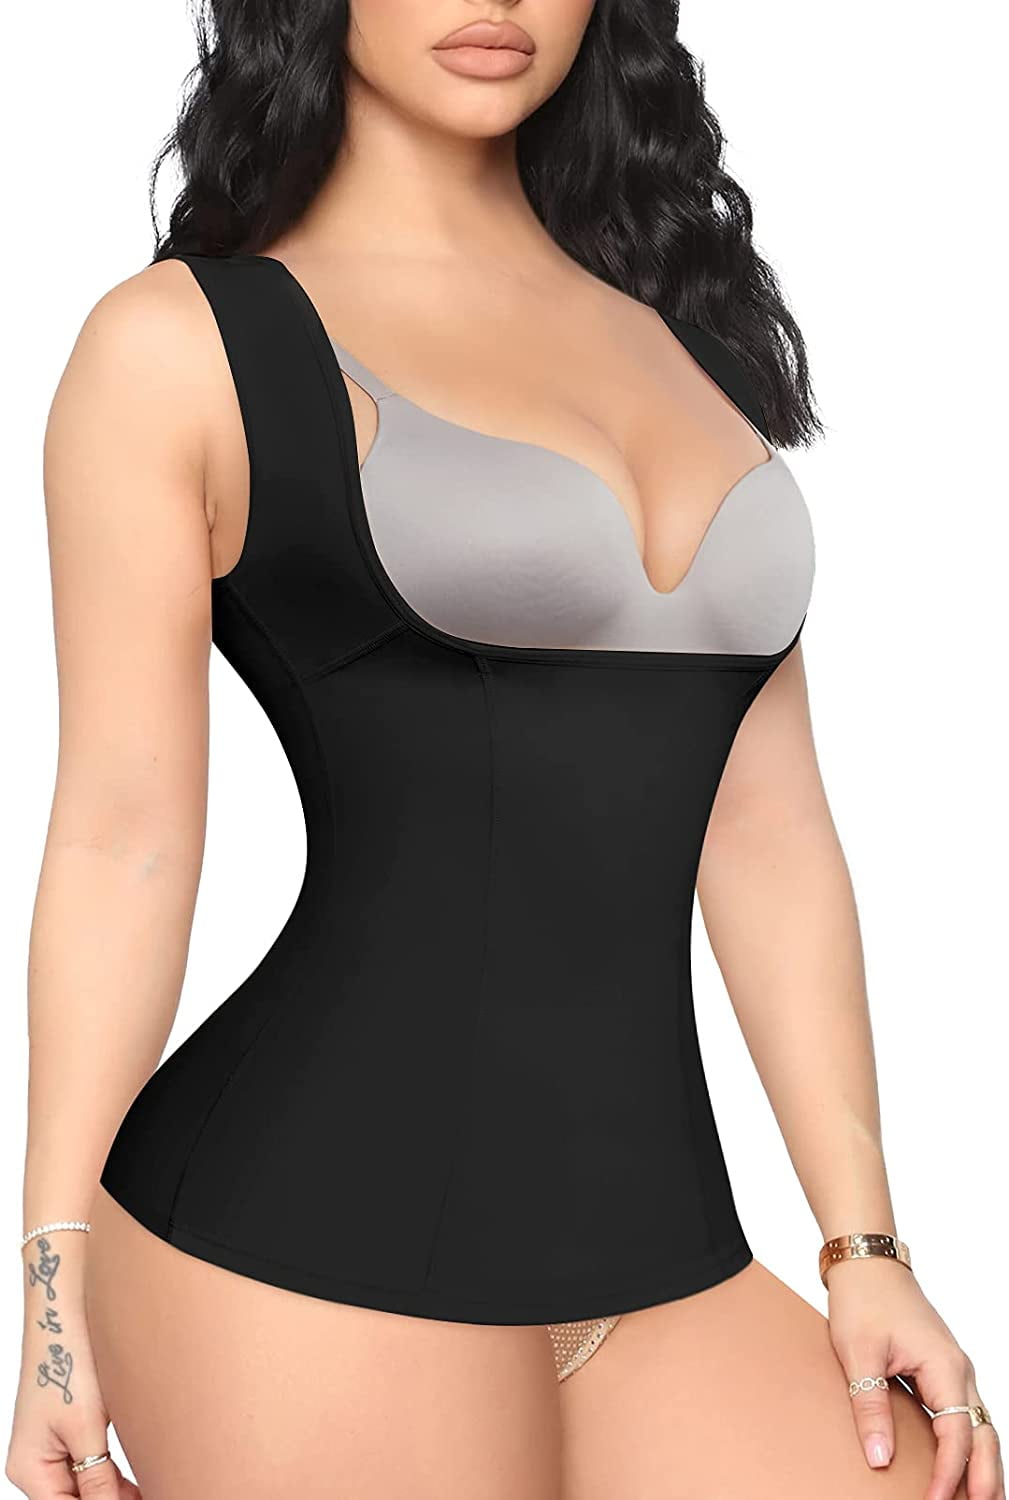 Gotoly Women Waist Trainer Shapewear Vest Tummy Control Workout Tank Top  Corset (Black XX-Large) 